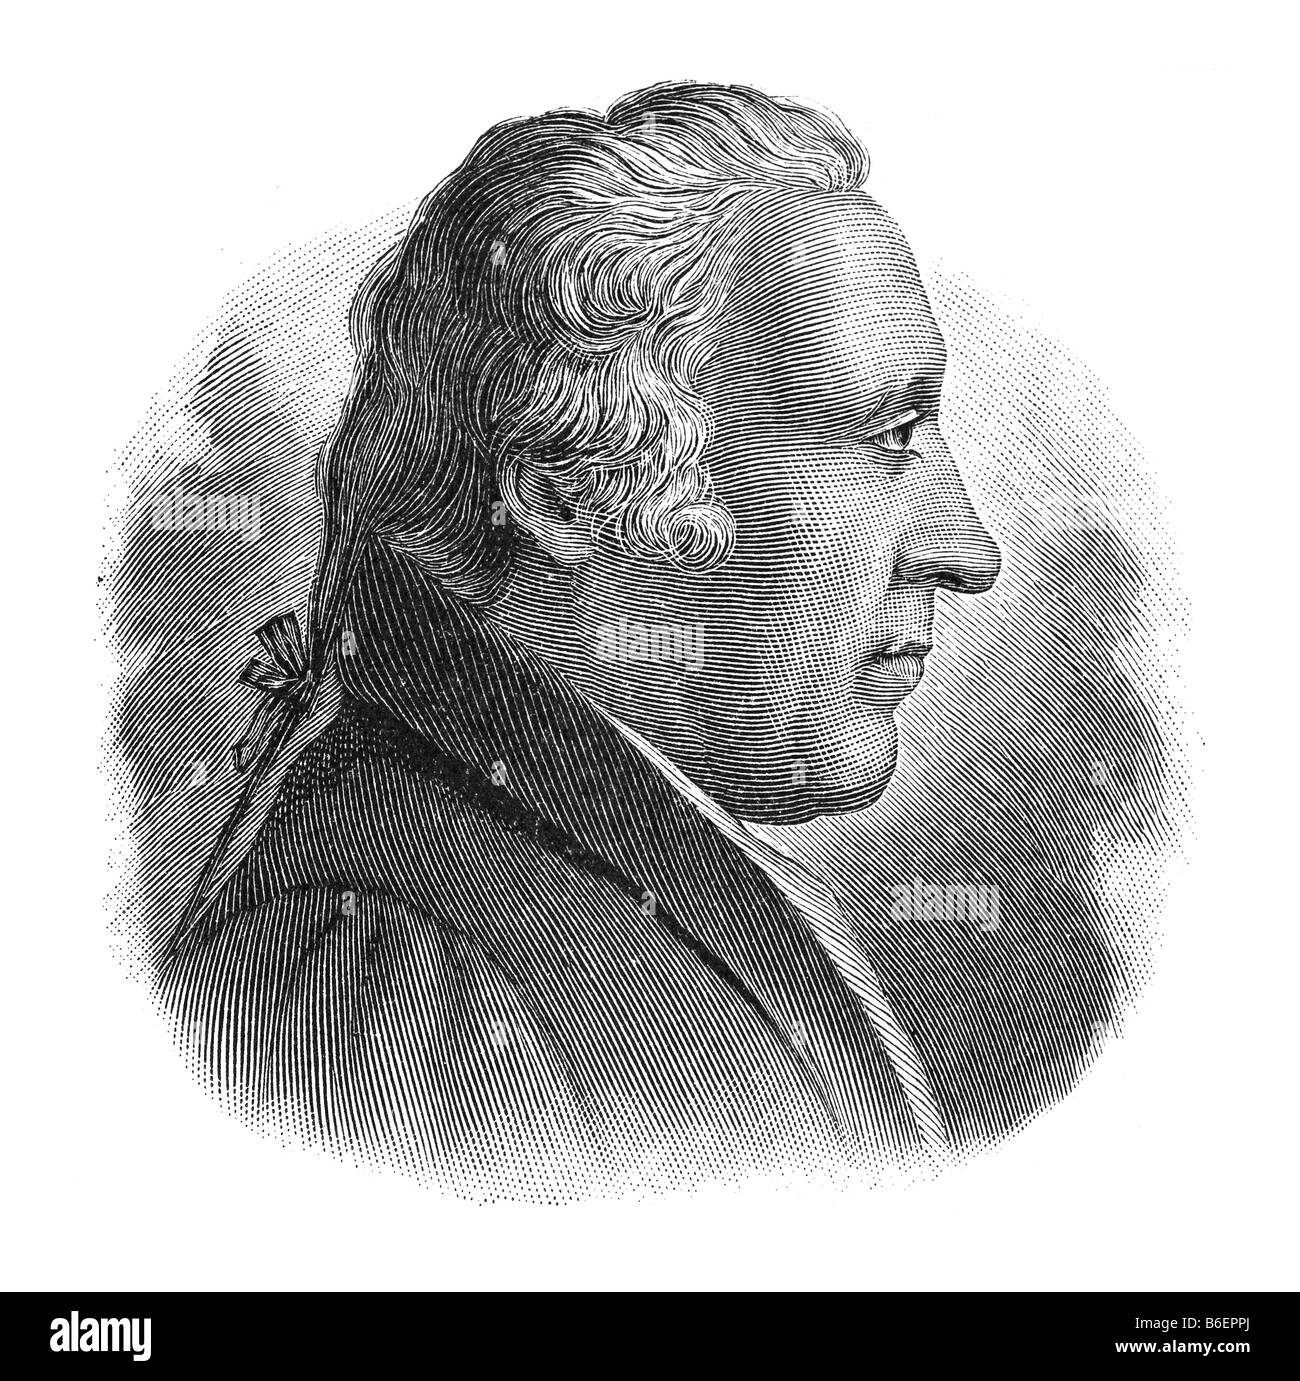 James Watt, 19. January 1736 Greenock - 25. August 1819 in his house Heathfield, Staffordshire Stock Photo